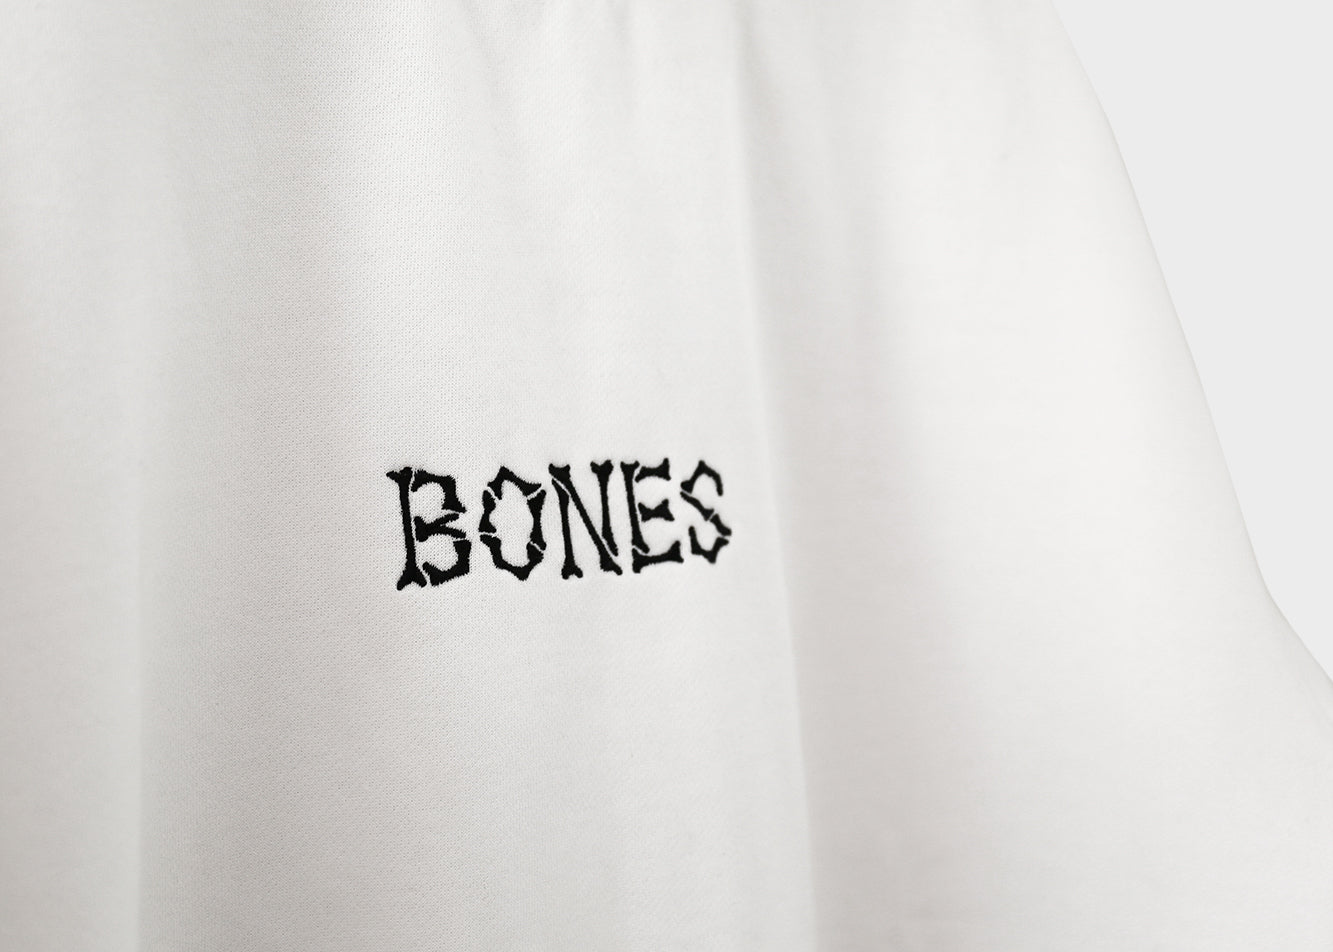 Bones Club Crew Sweater - White